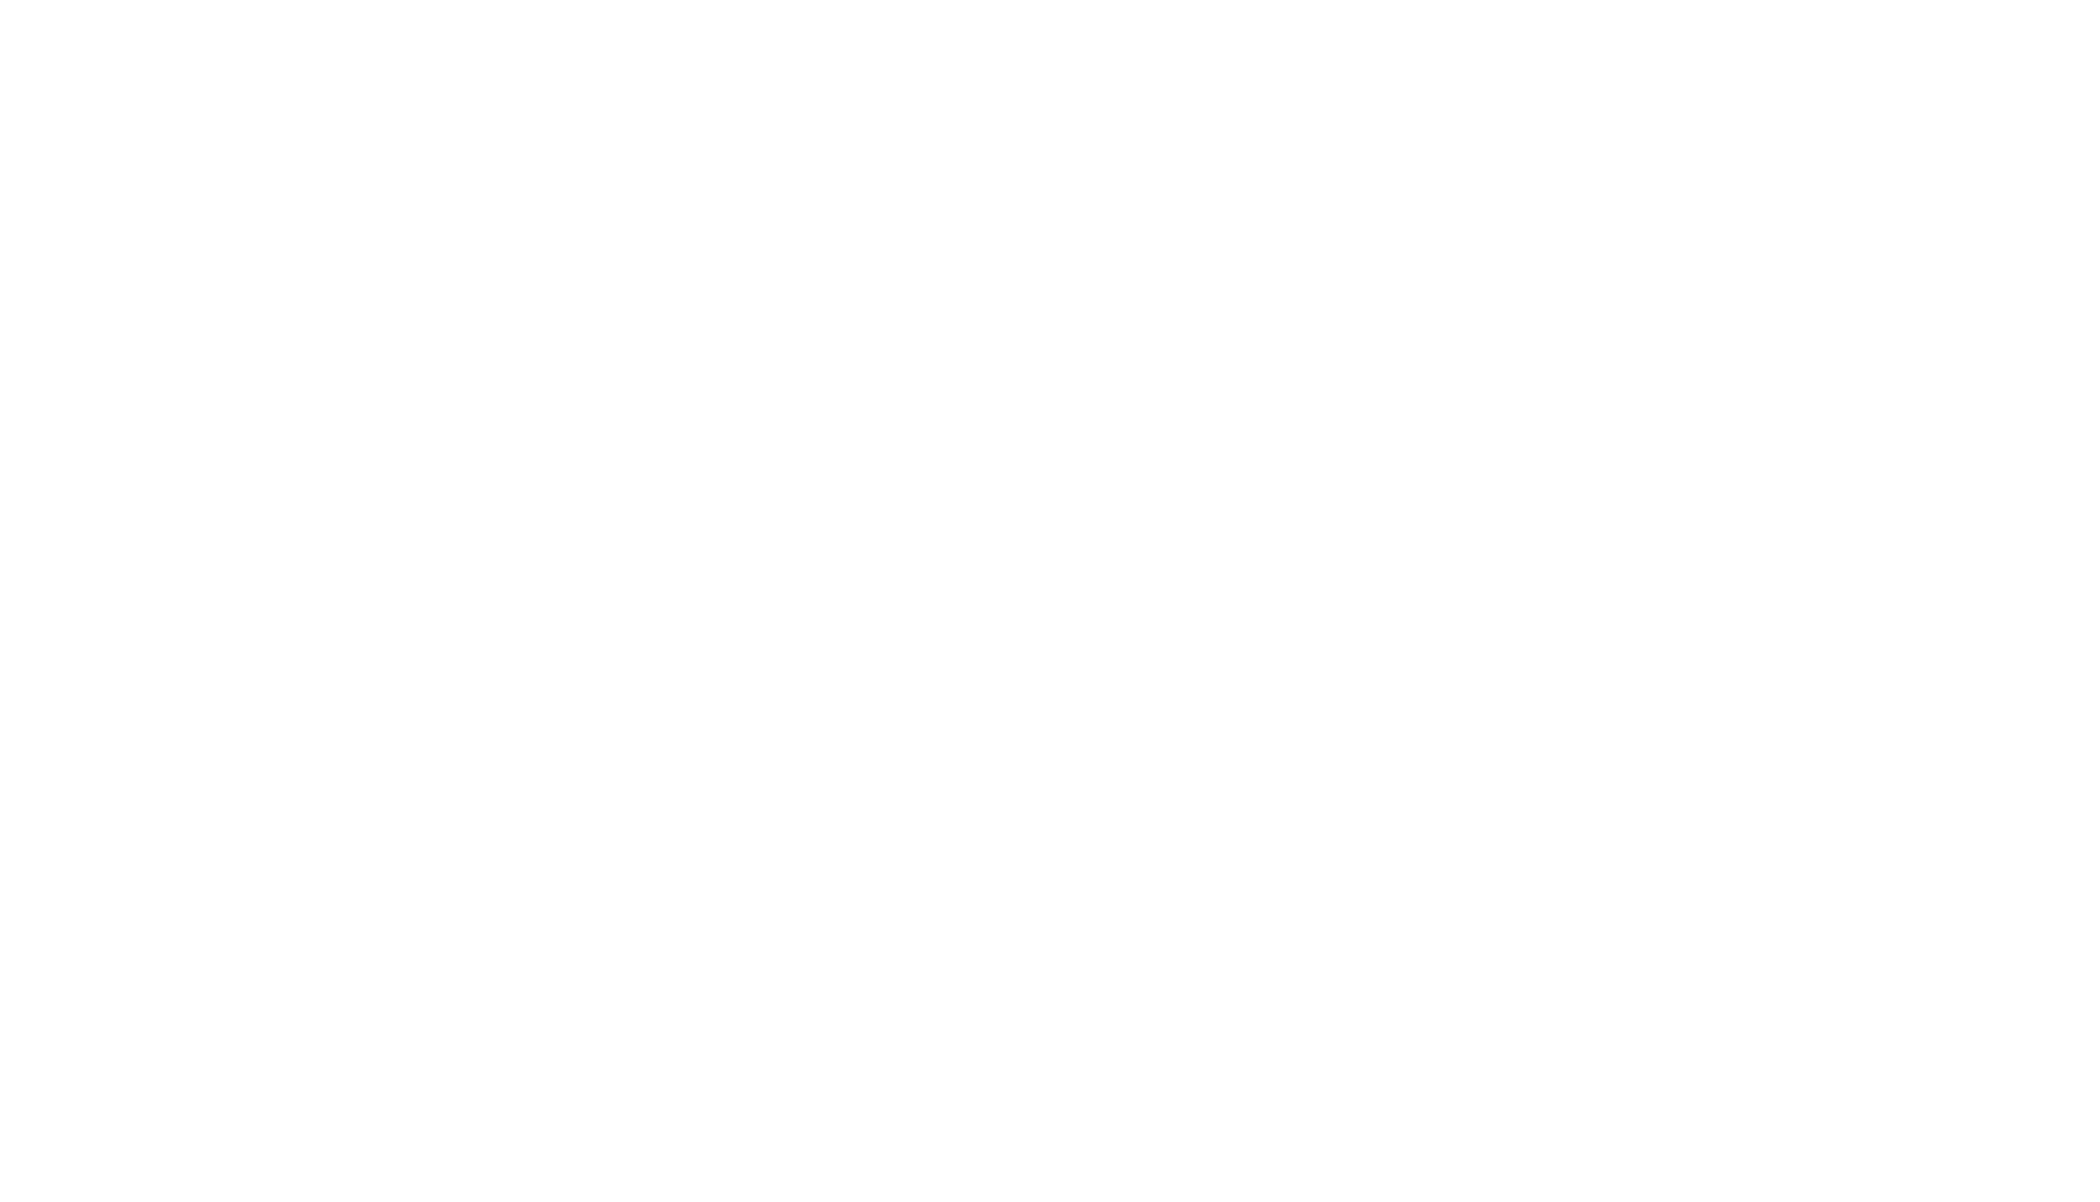 Drawlz Brand Co.  Client Service Center logo